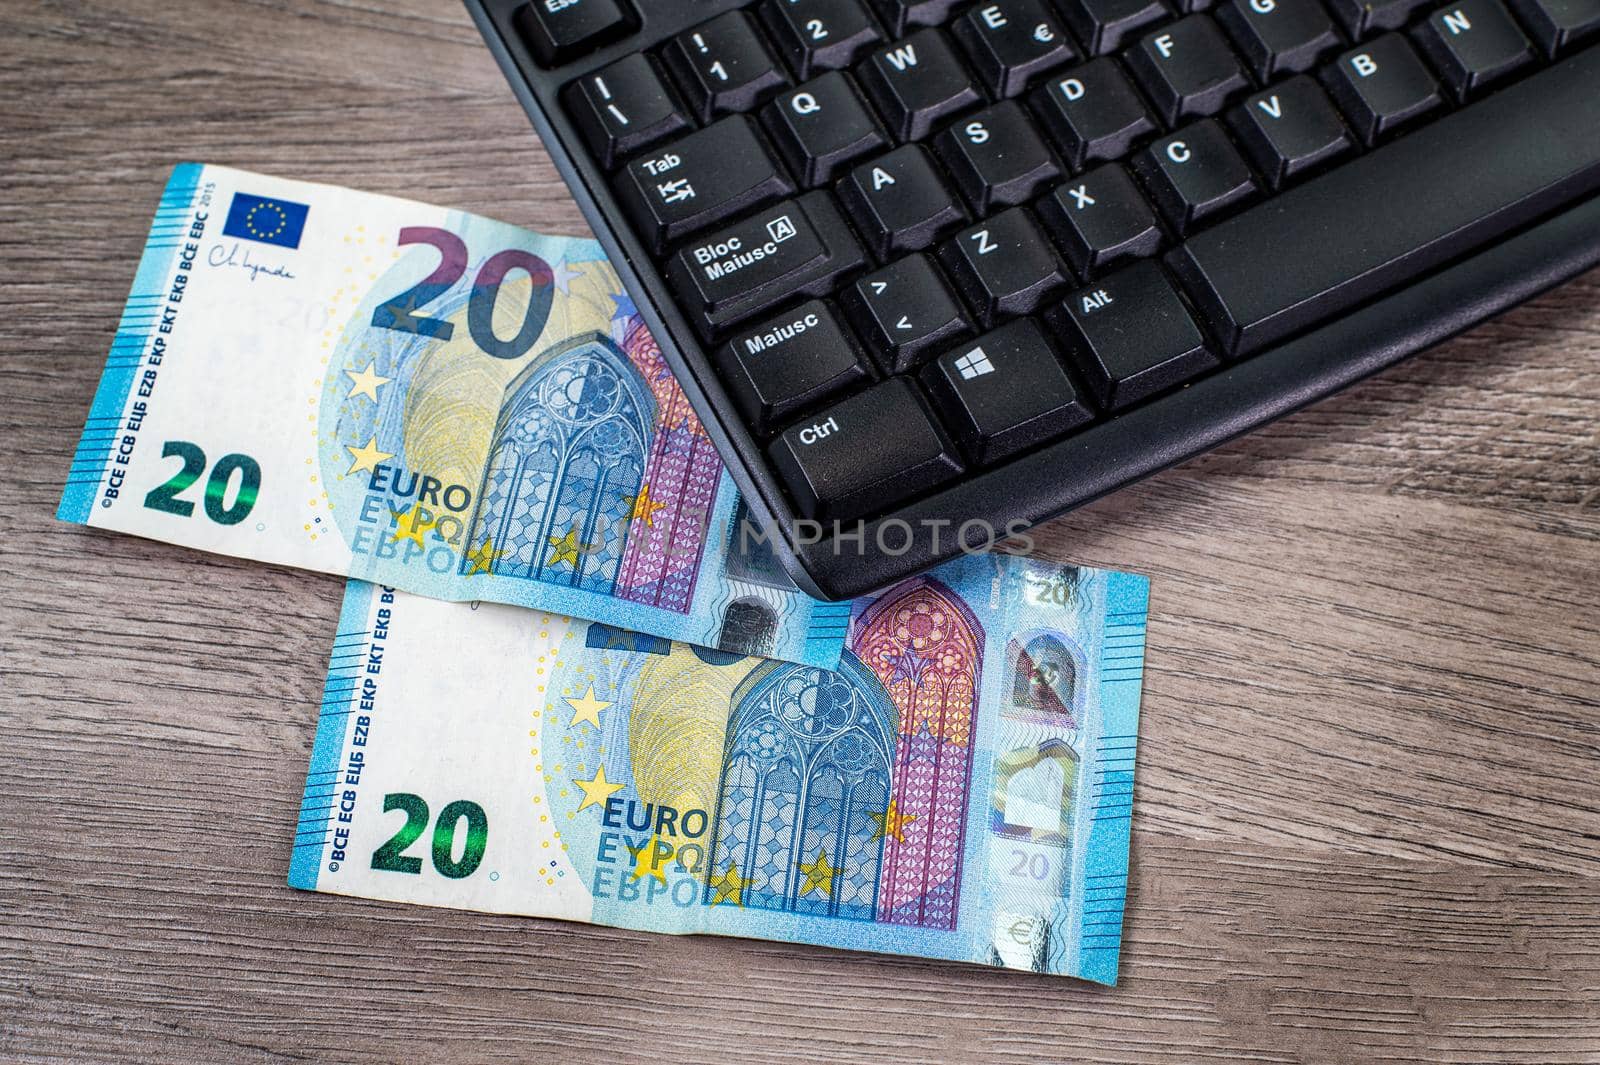 20 euro bills and computer keyboard by carfedeph